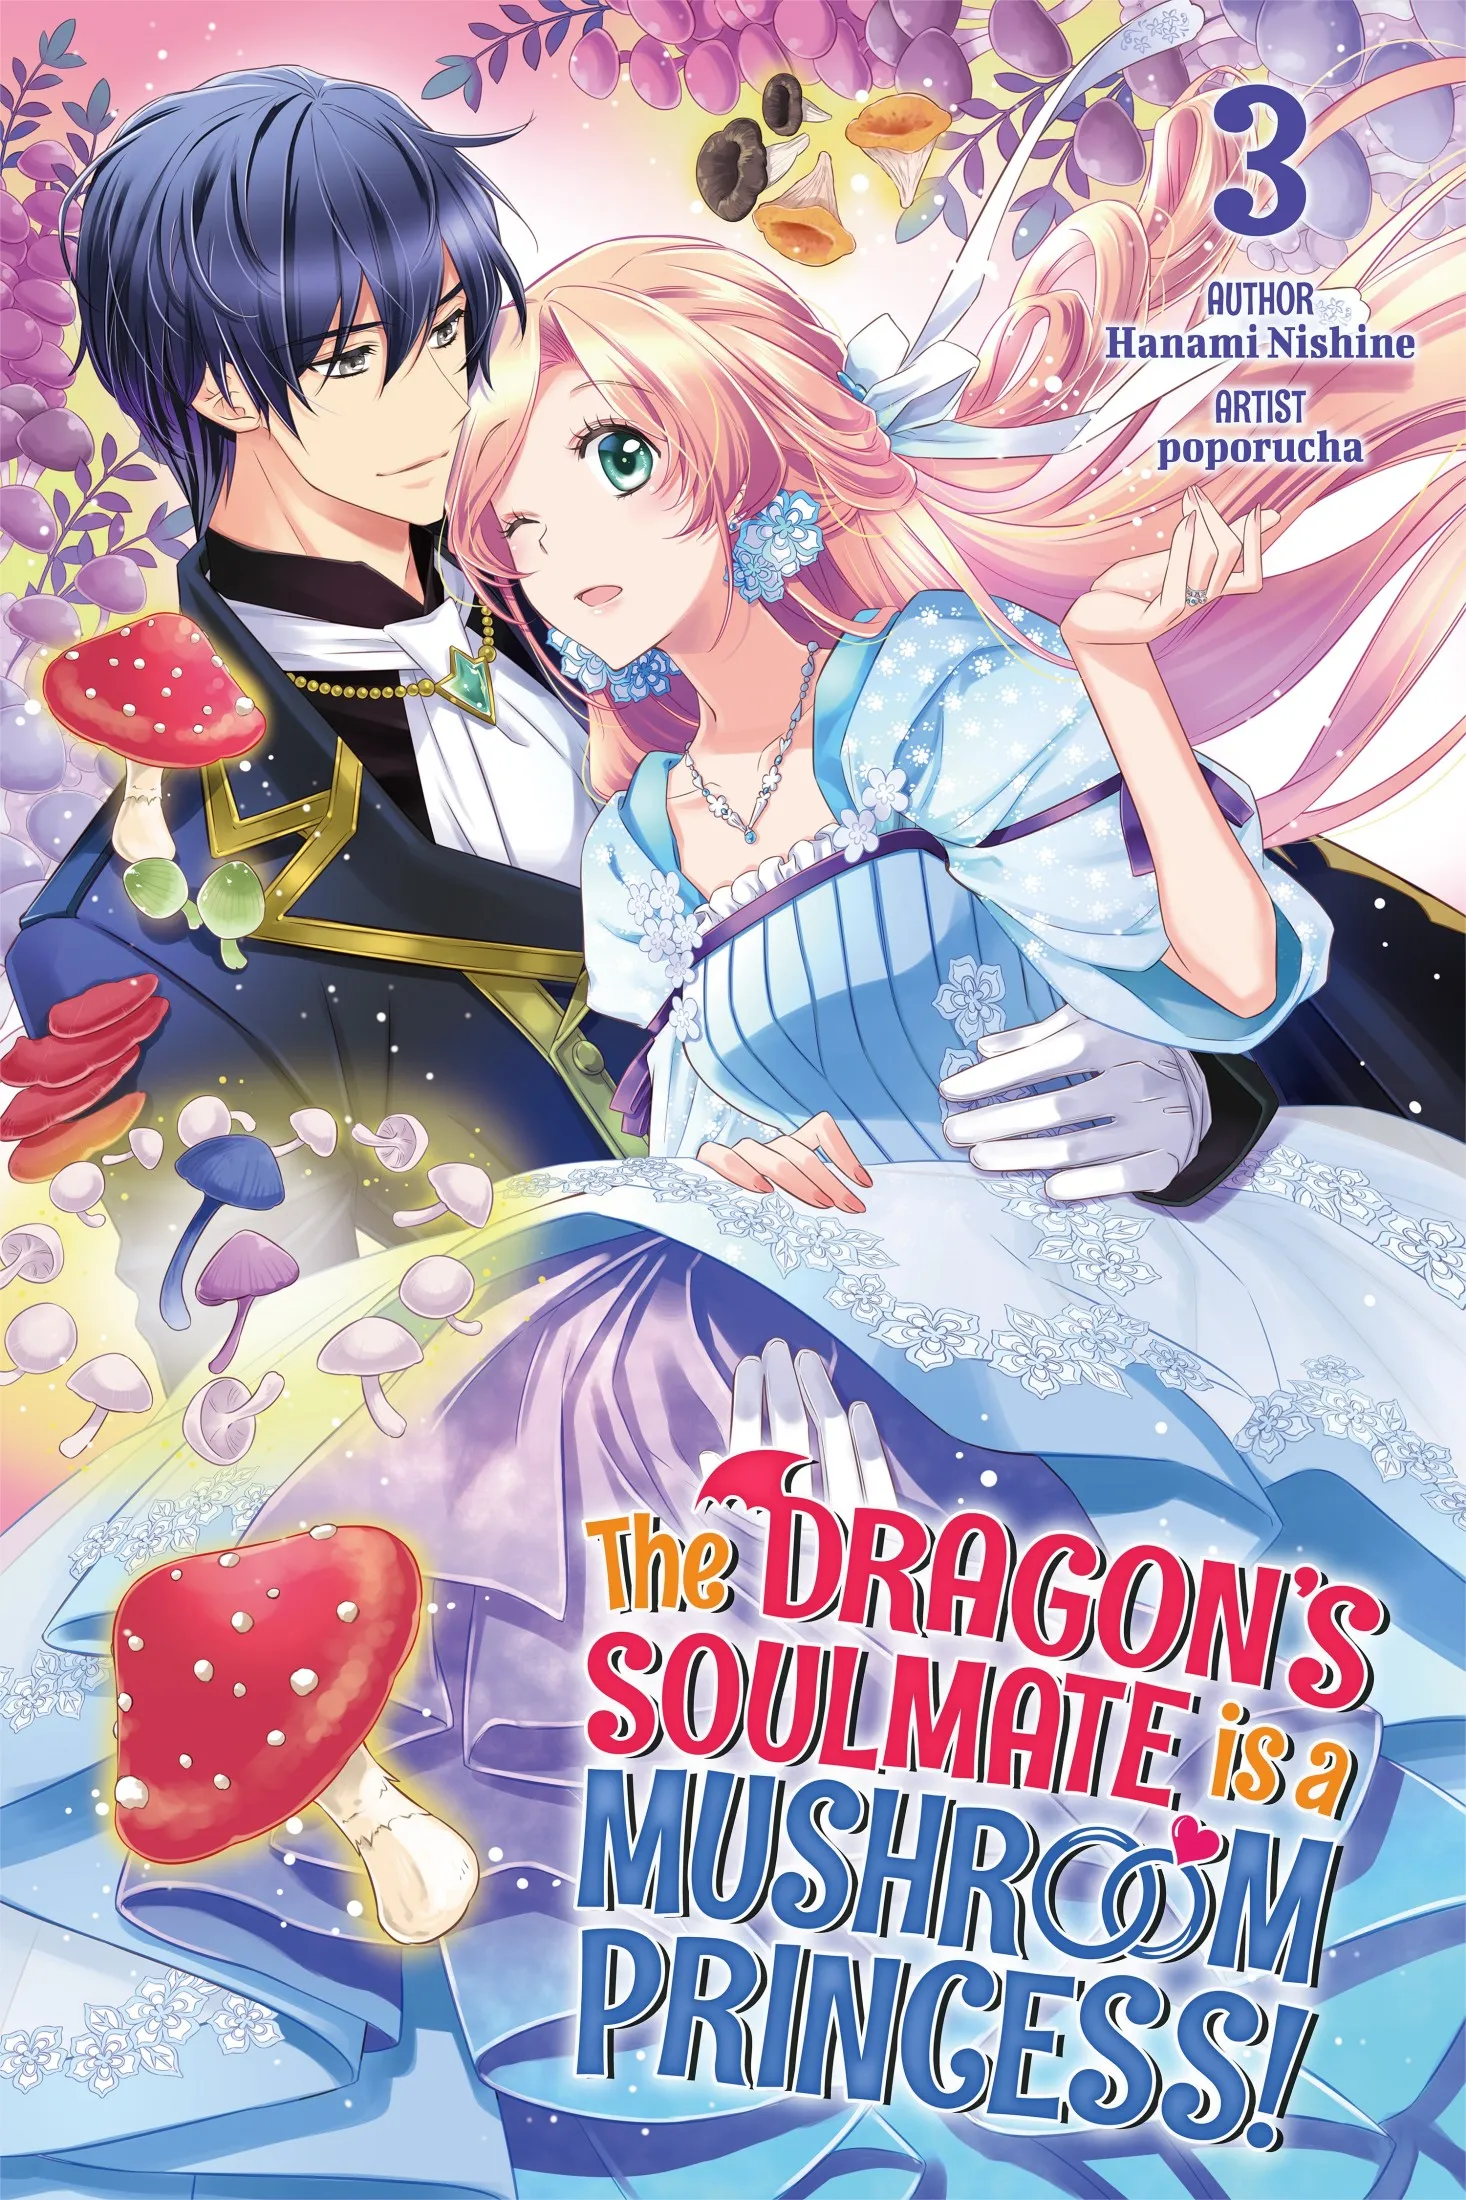 The Dragon’s Soulmate is a Mushroom Princess! Vol.3 (The Dragon’s Soulmate is a Mushroom Princess! #3)